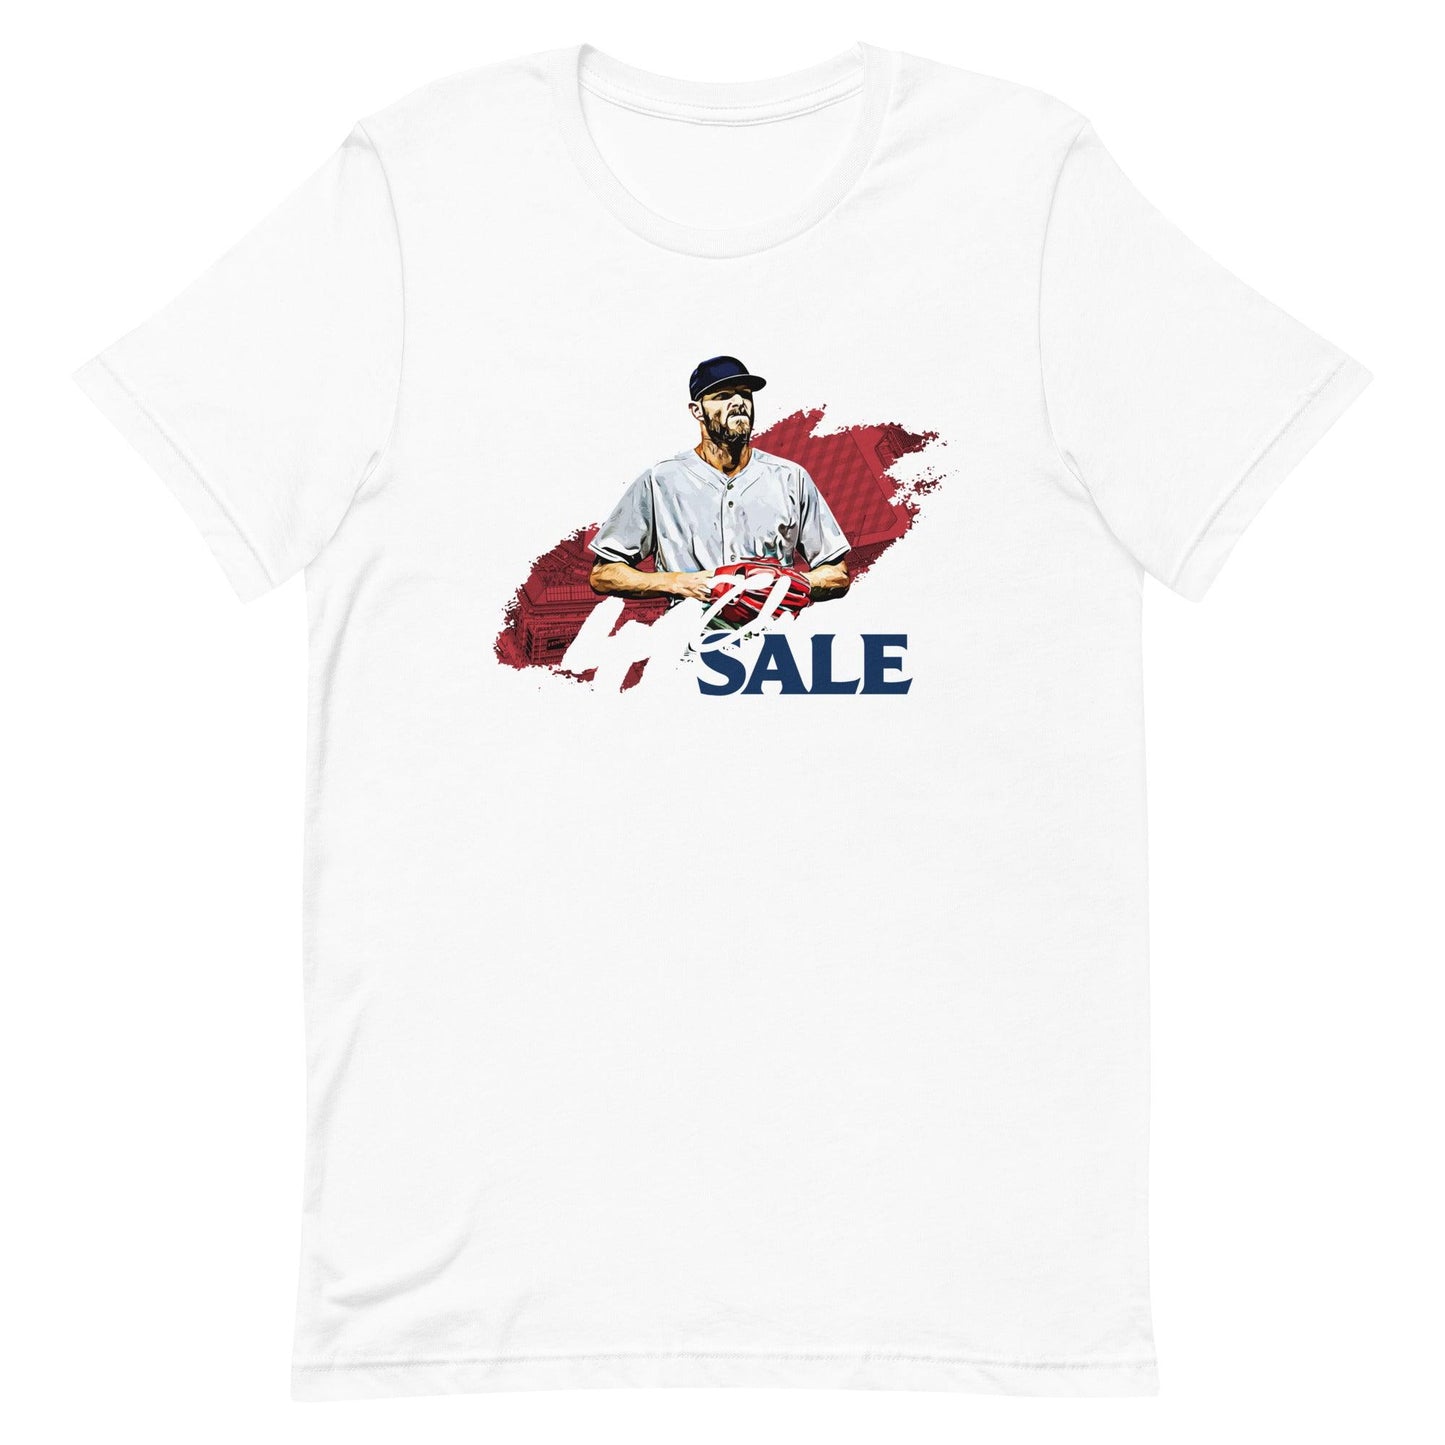 Chris Sale "Gameday" t-shirt - Fan Arch